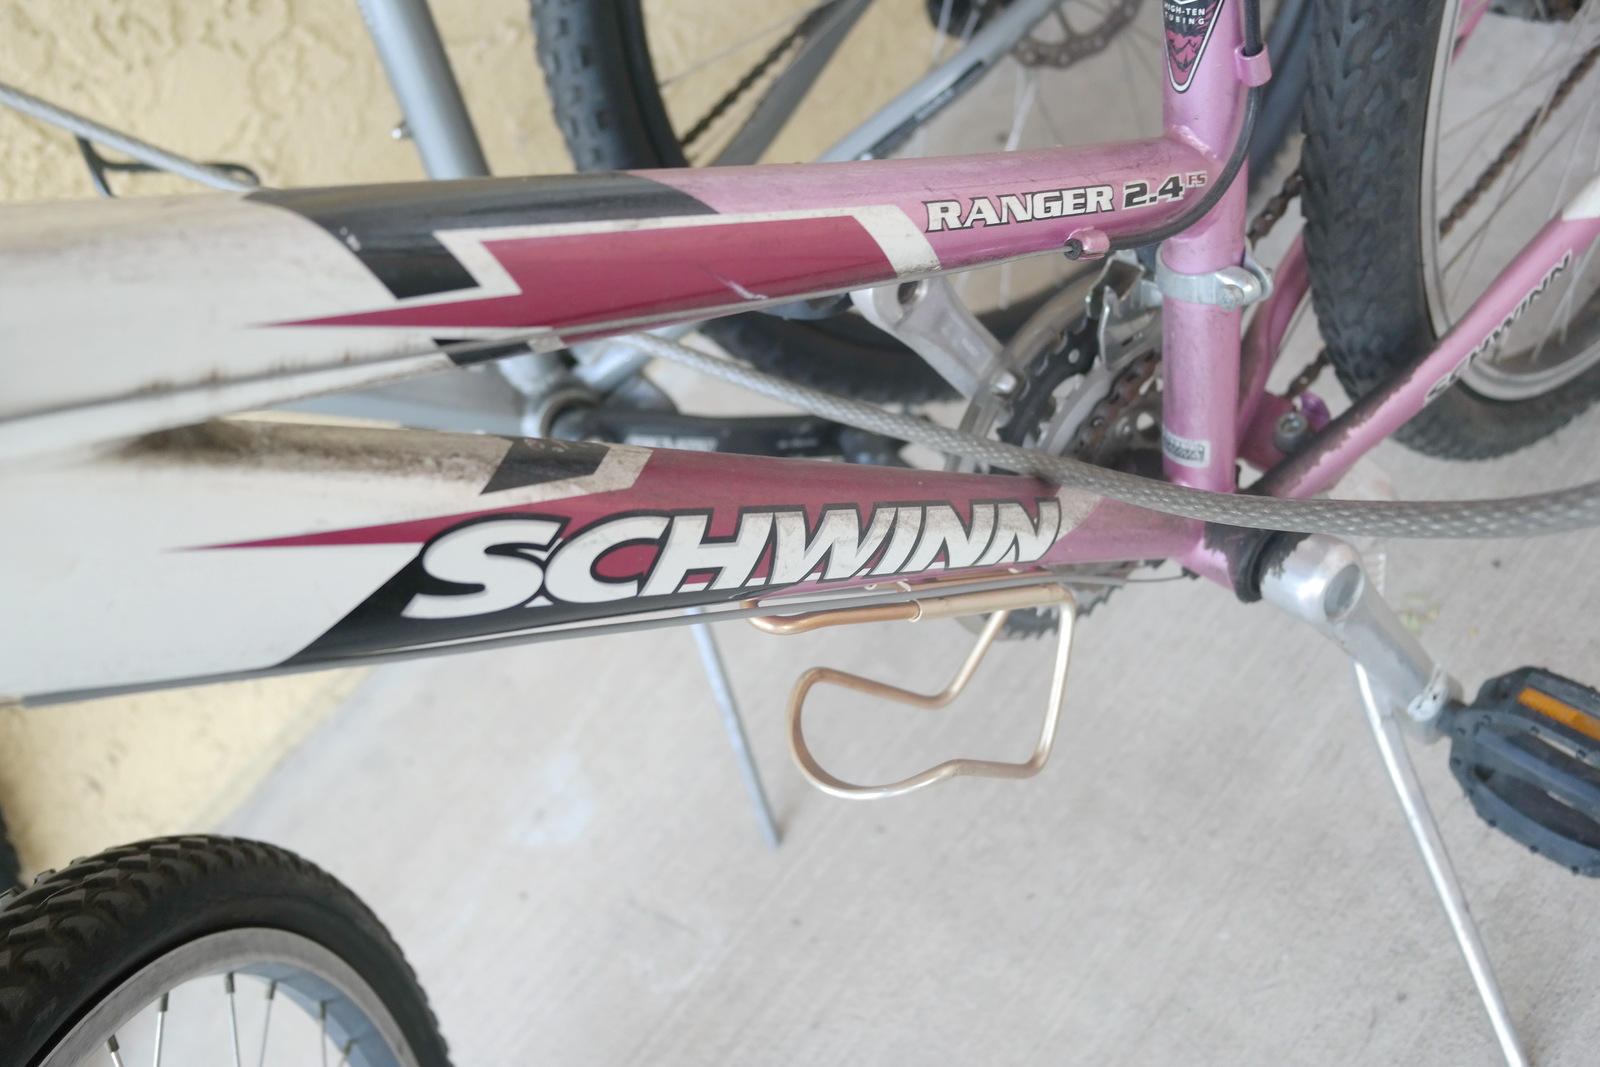 schwinn ranger 2.4 fs mountain bike